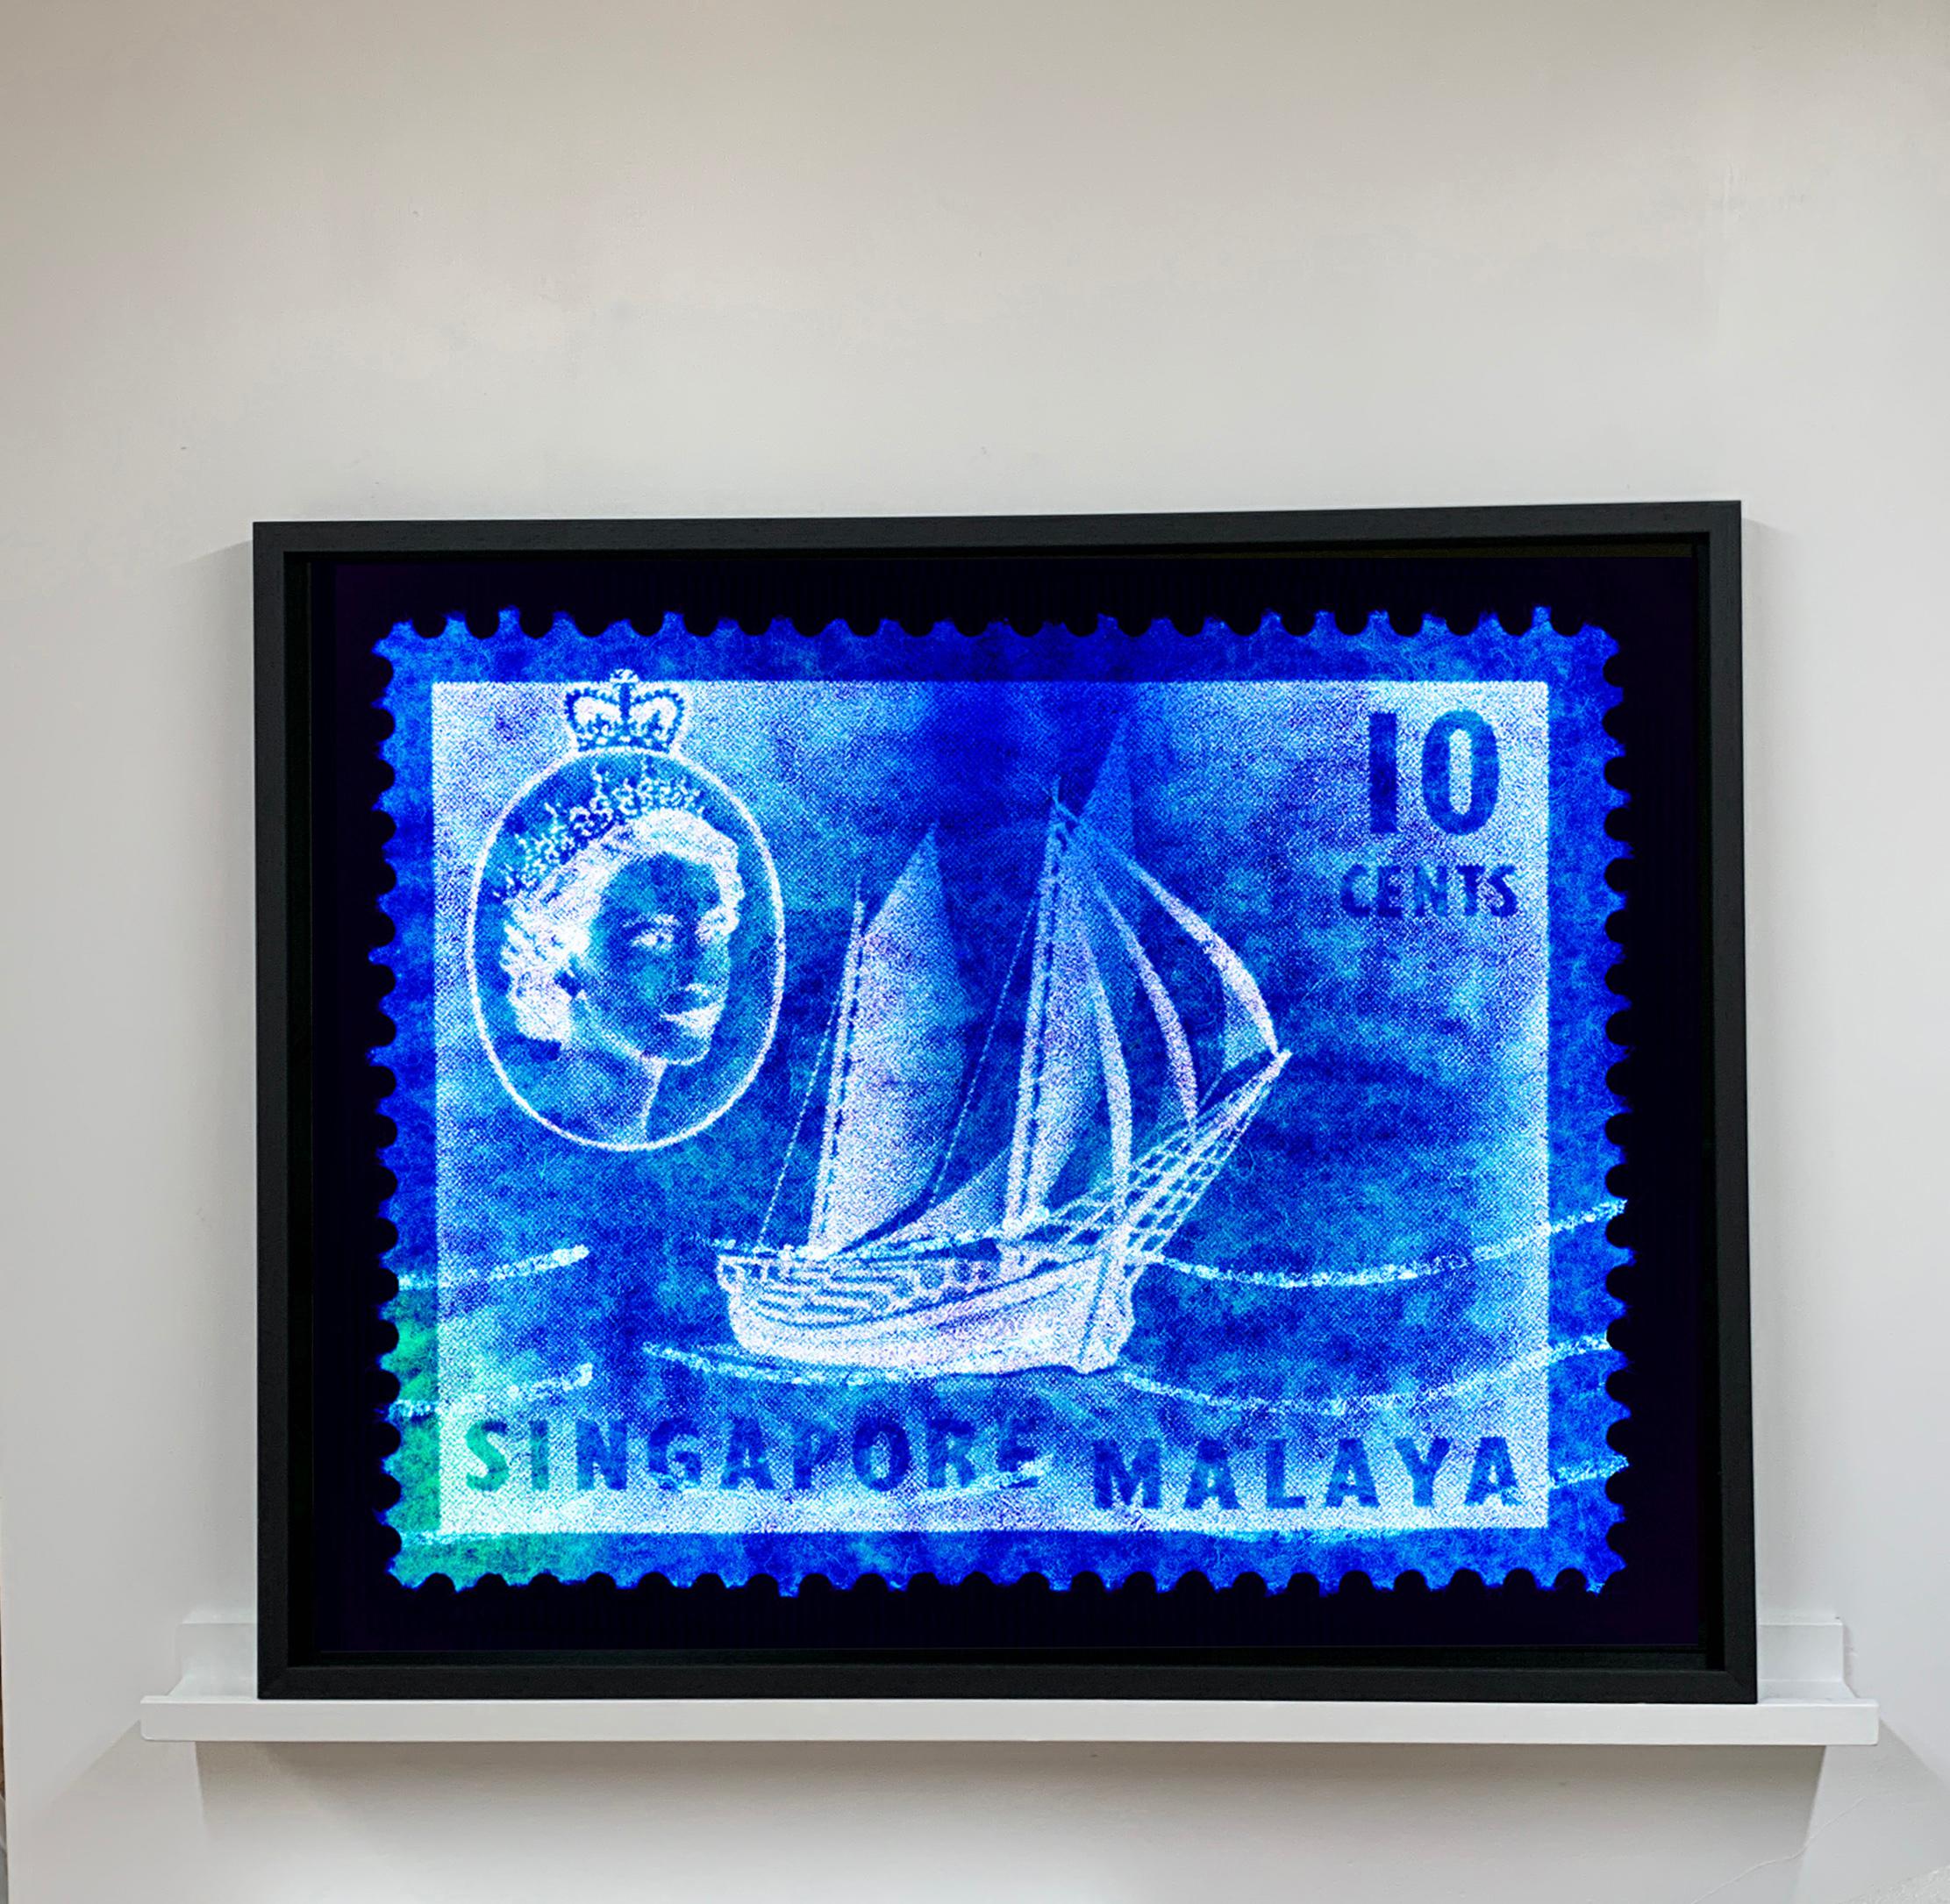 Singapur Singapore Stempel-Kollektion, 10 Cents QEII Schiff Serie Blau - Pop Art Farbe Foto – Photograph von Heidler & Heeps